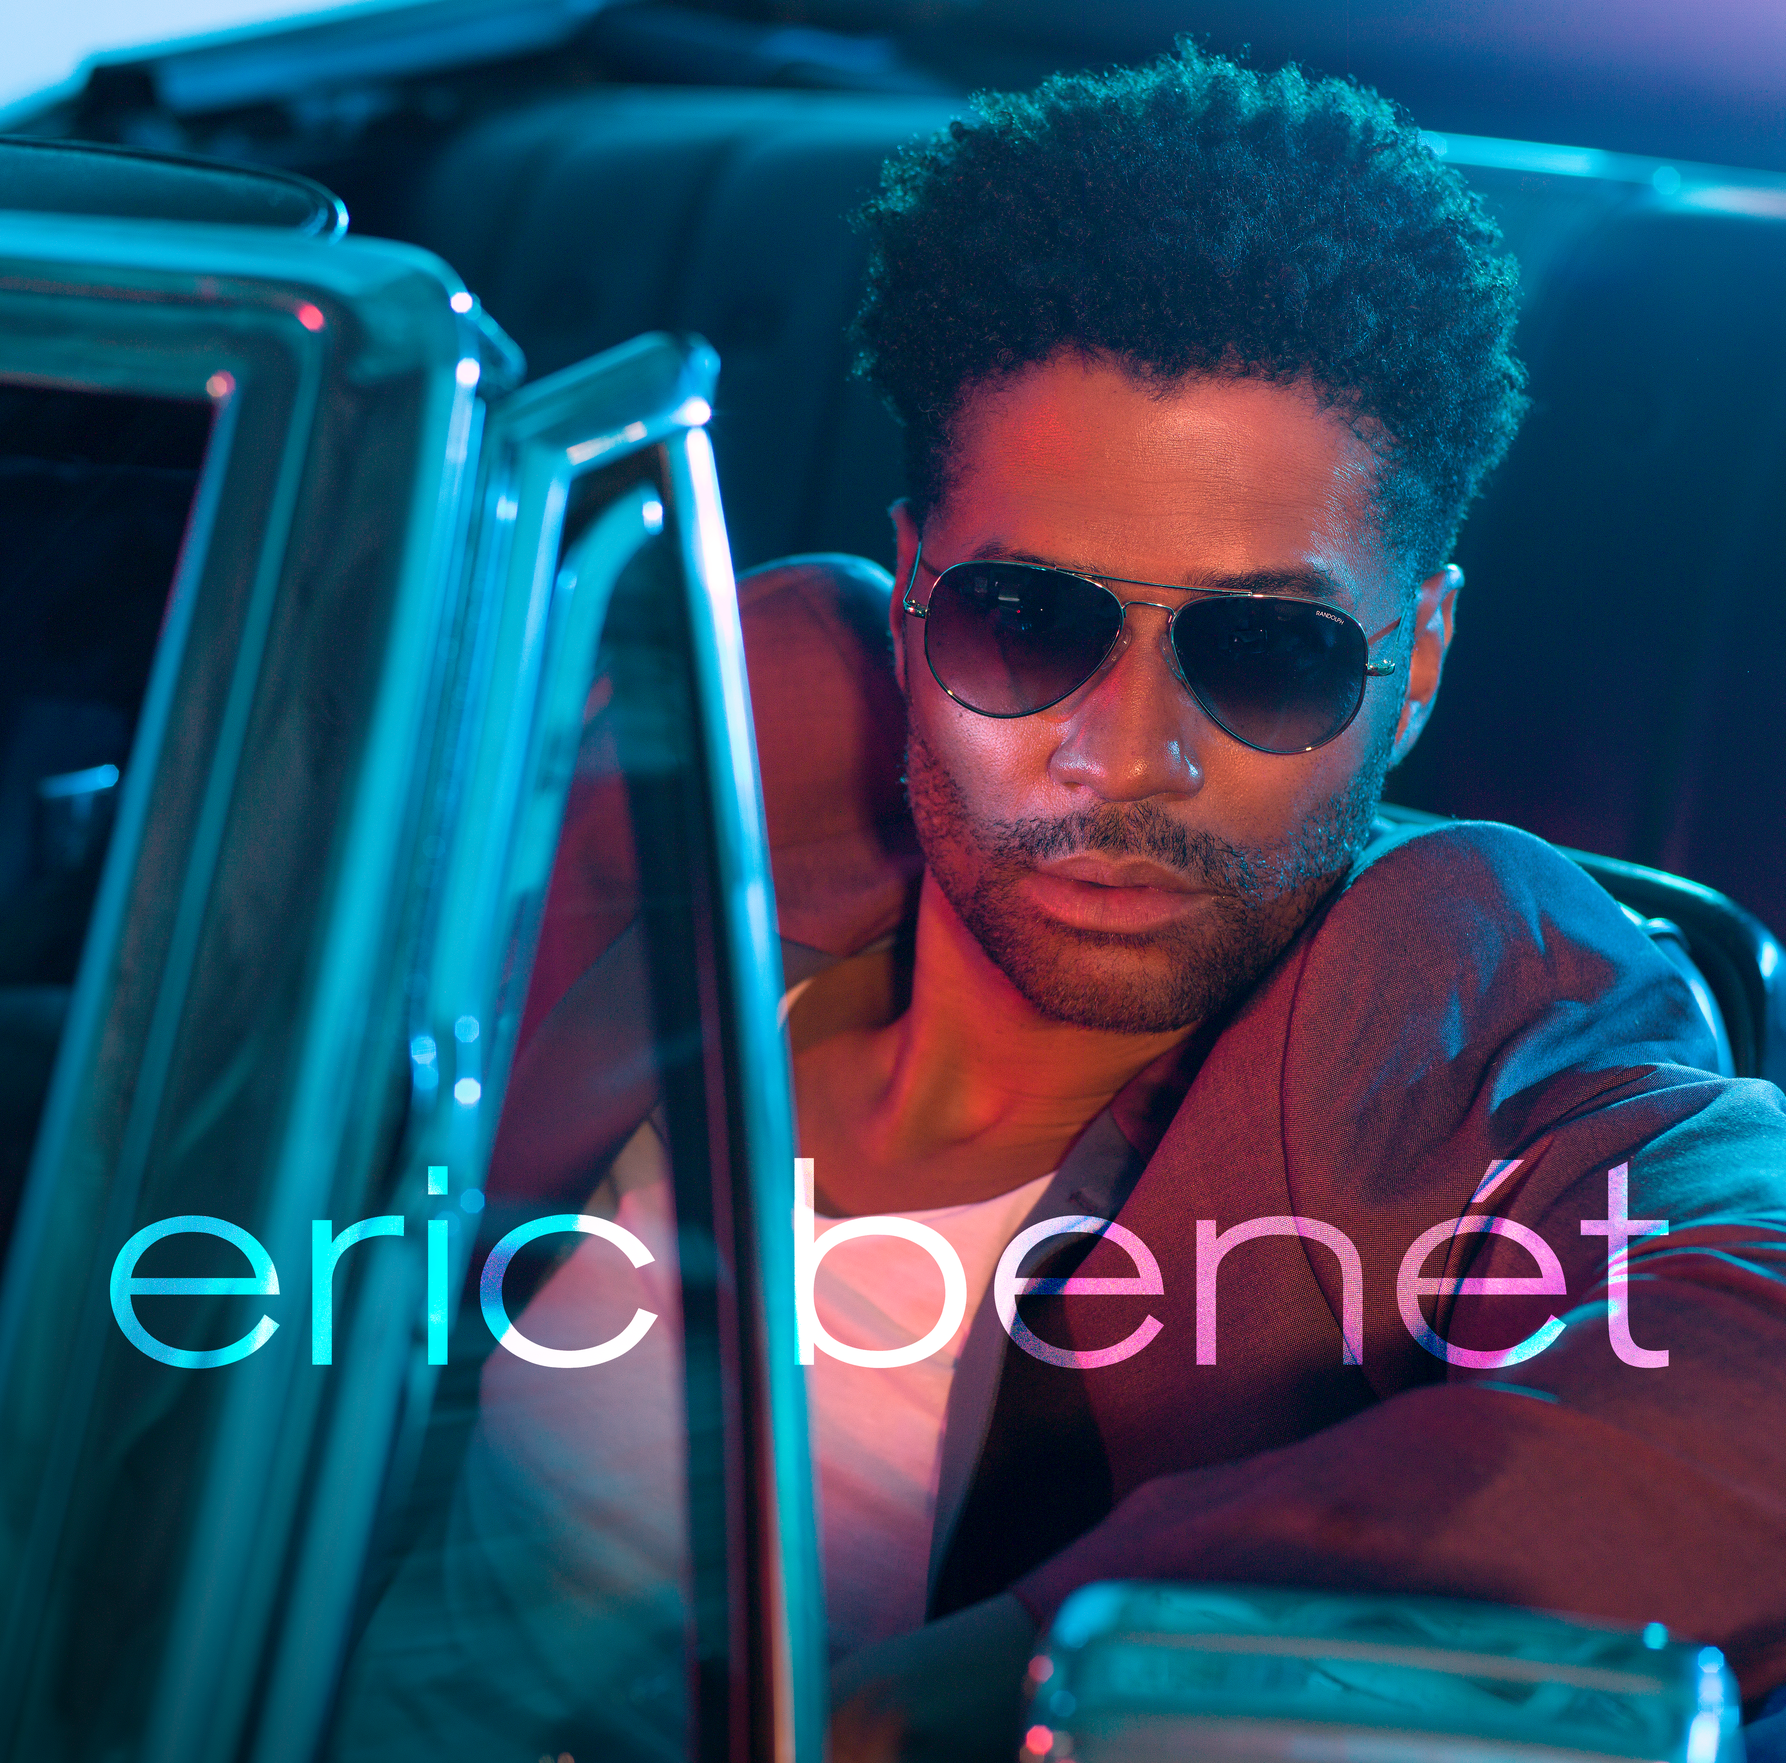 [Album Review] Eric Benet – “eric benet”